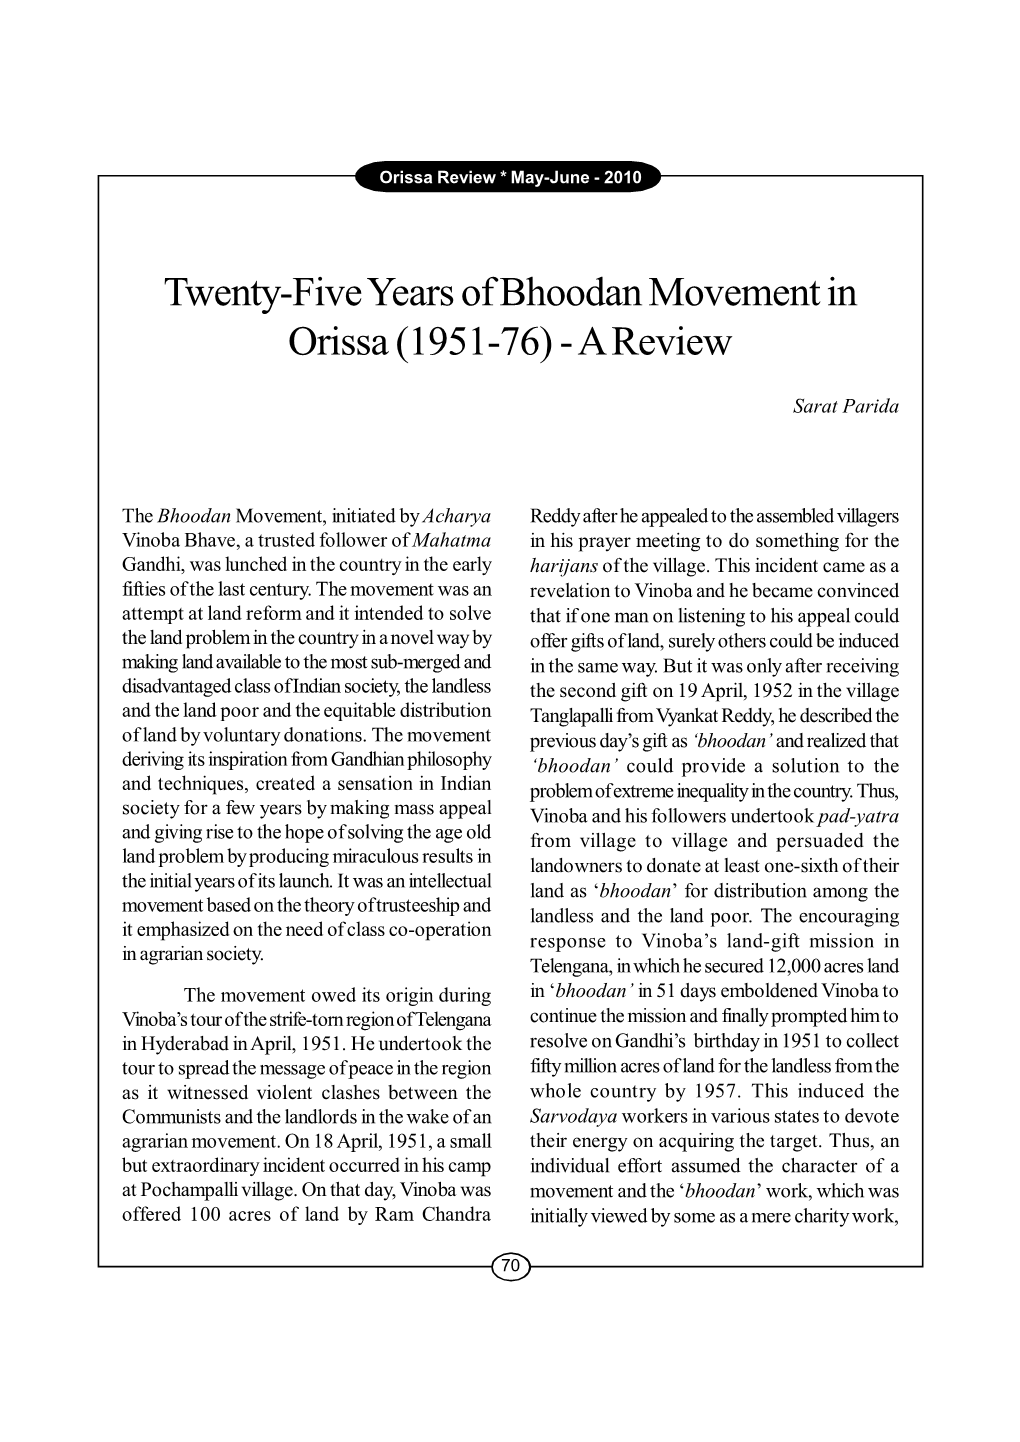 Twenty-Five Years of Bhoodan Movement in Orissa (1951-76) - a Review